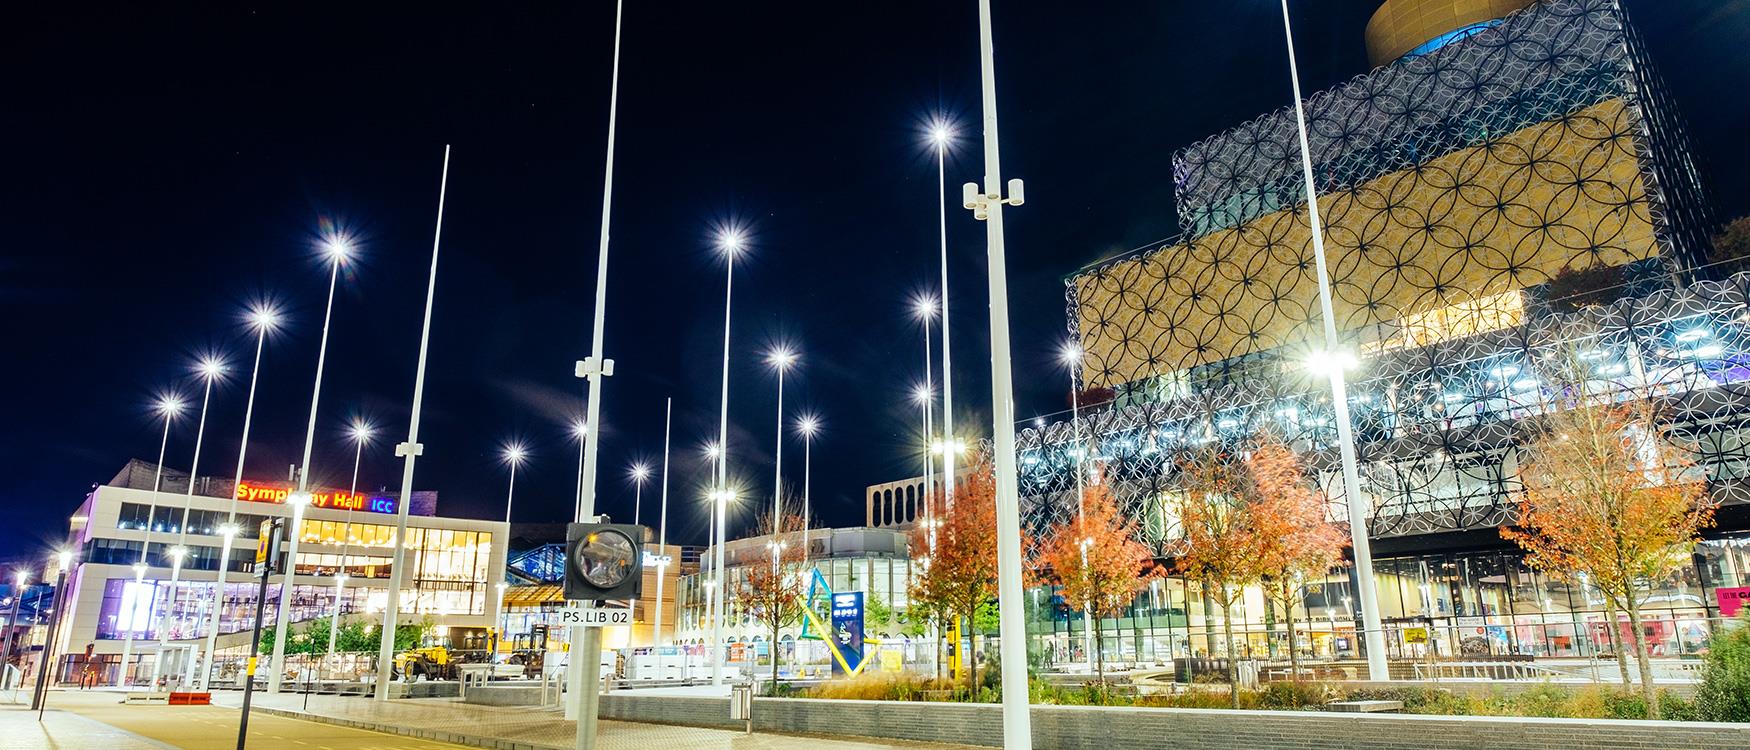 Centenary Square, Birmingham - by night